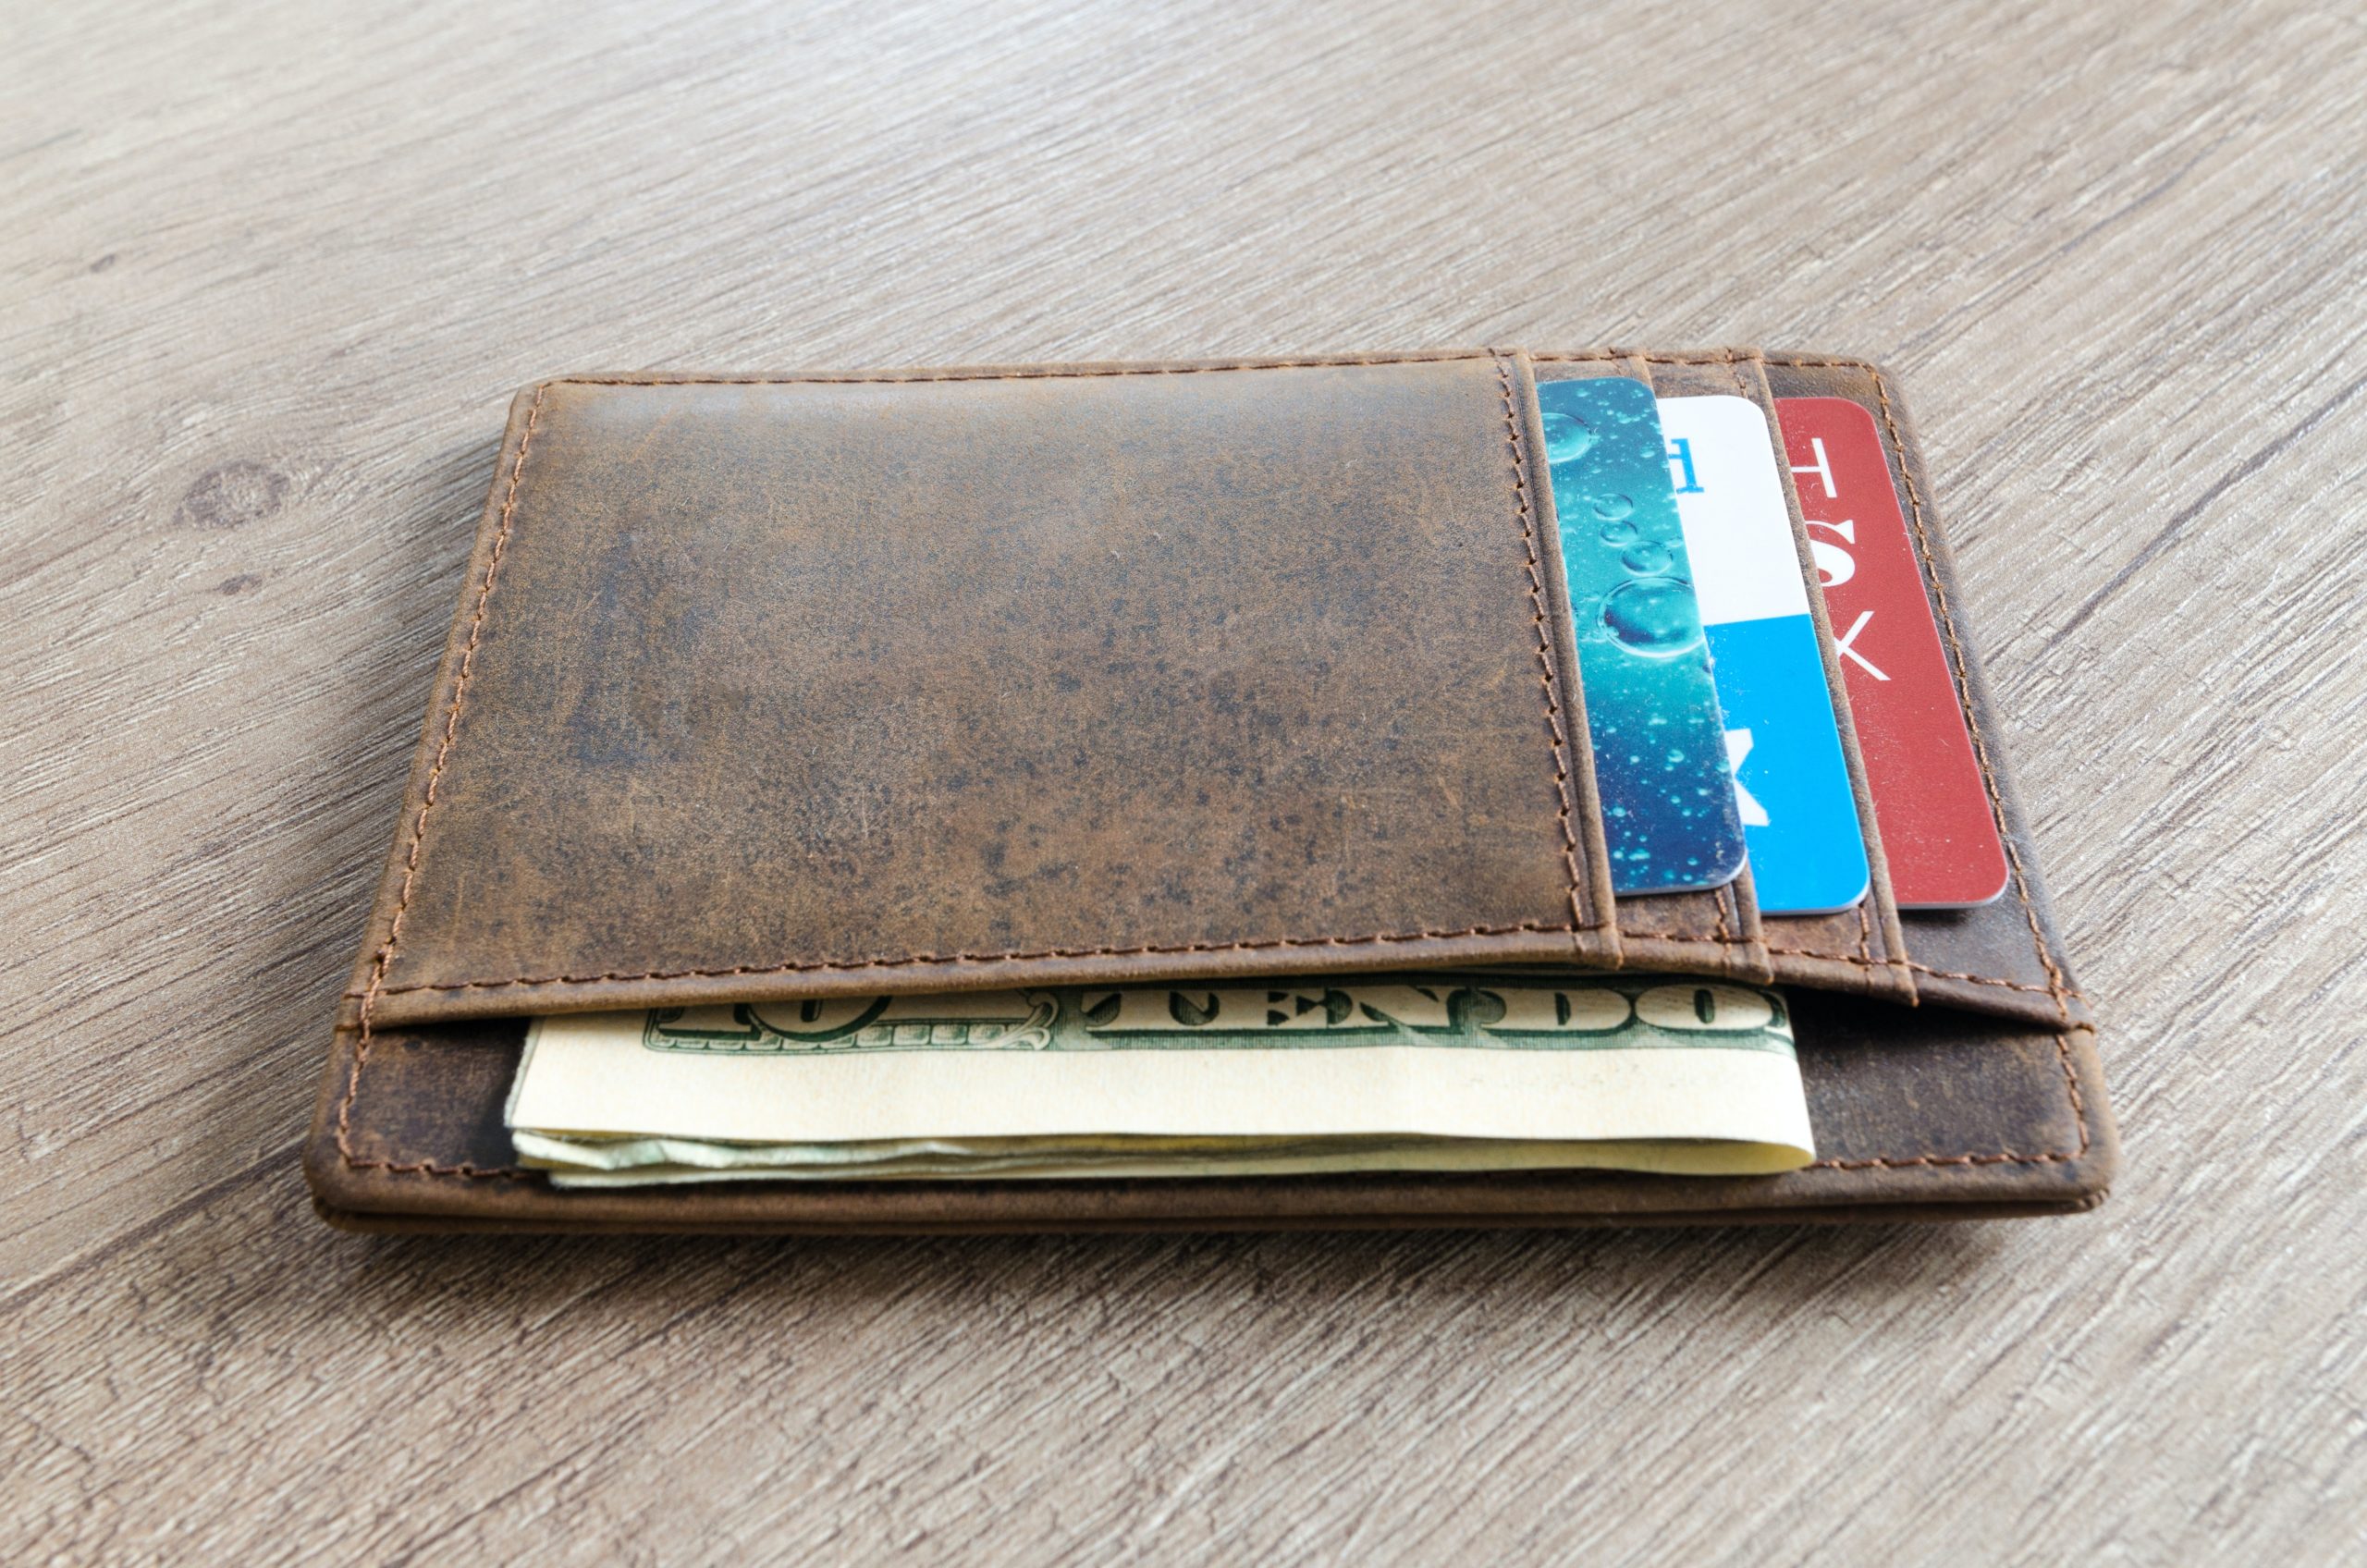 Social Security card in wallet